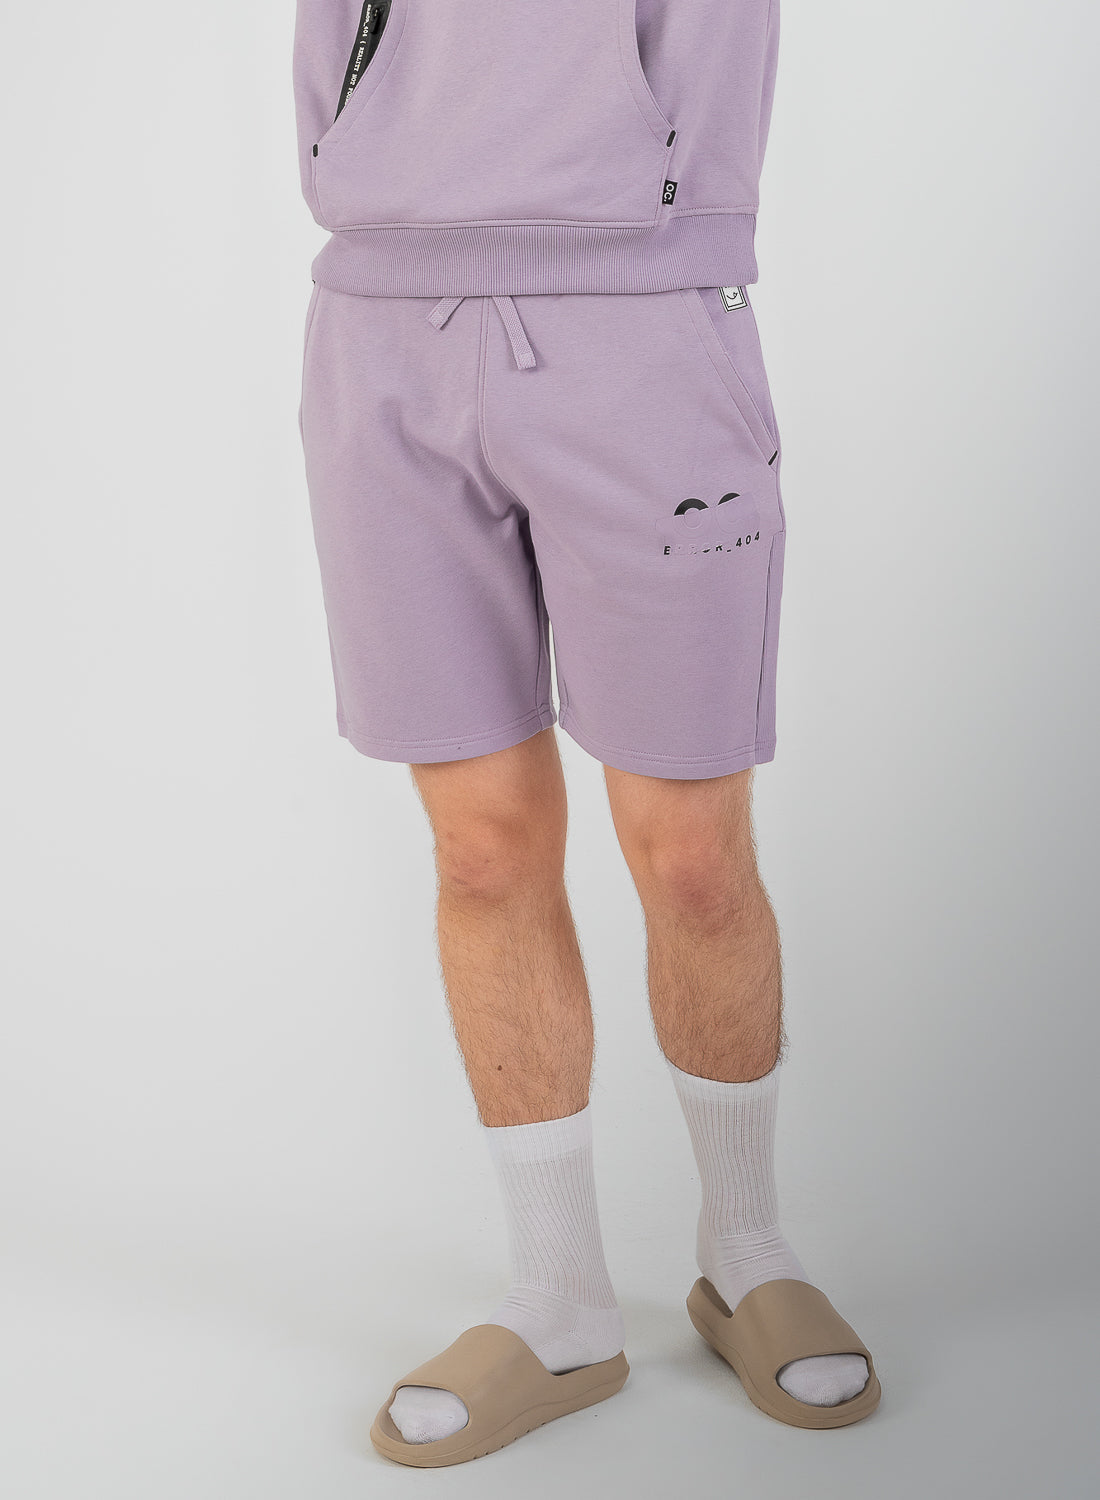 Error_404 Shorts - Faded Lilac